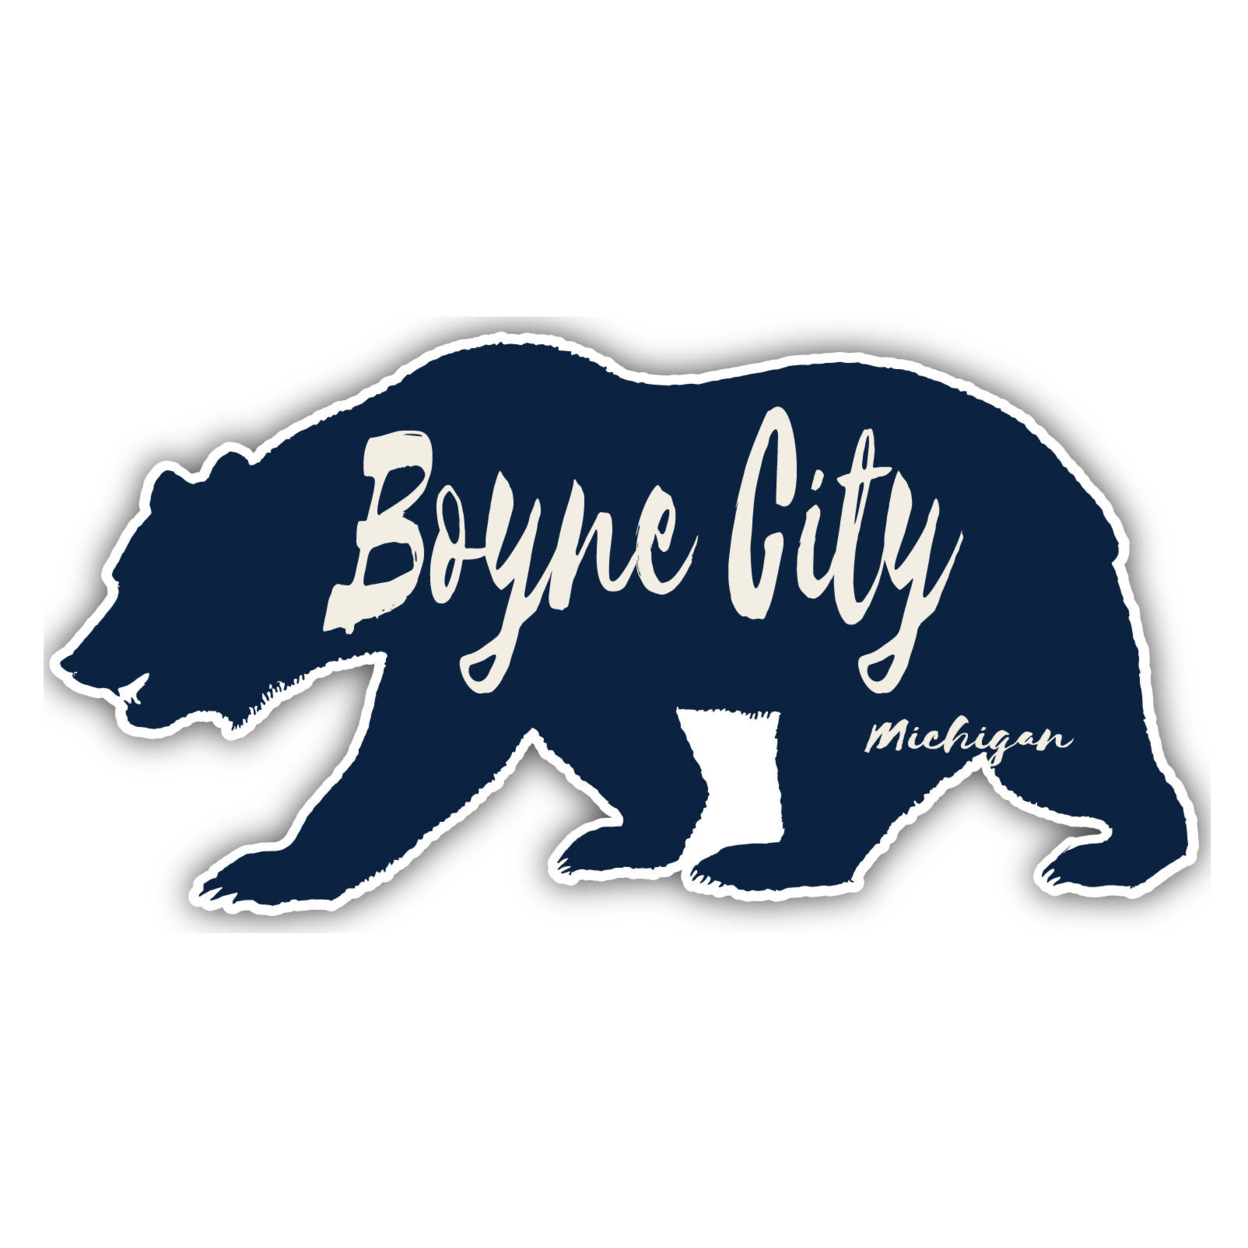 Boyne City Michigan Souvenir Decorative Stickers (Choose Theme And Size) - Single Unit, 8-Inch, Tent